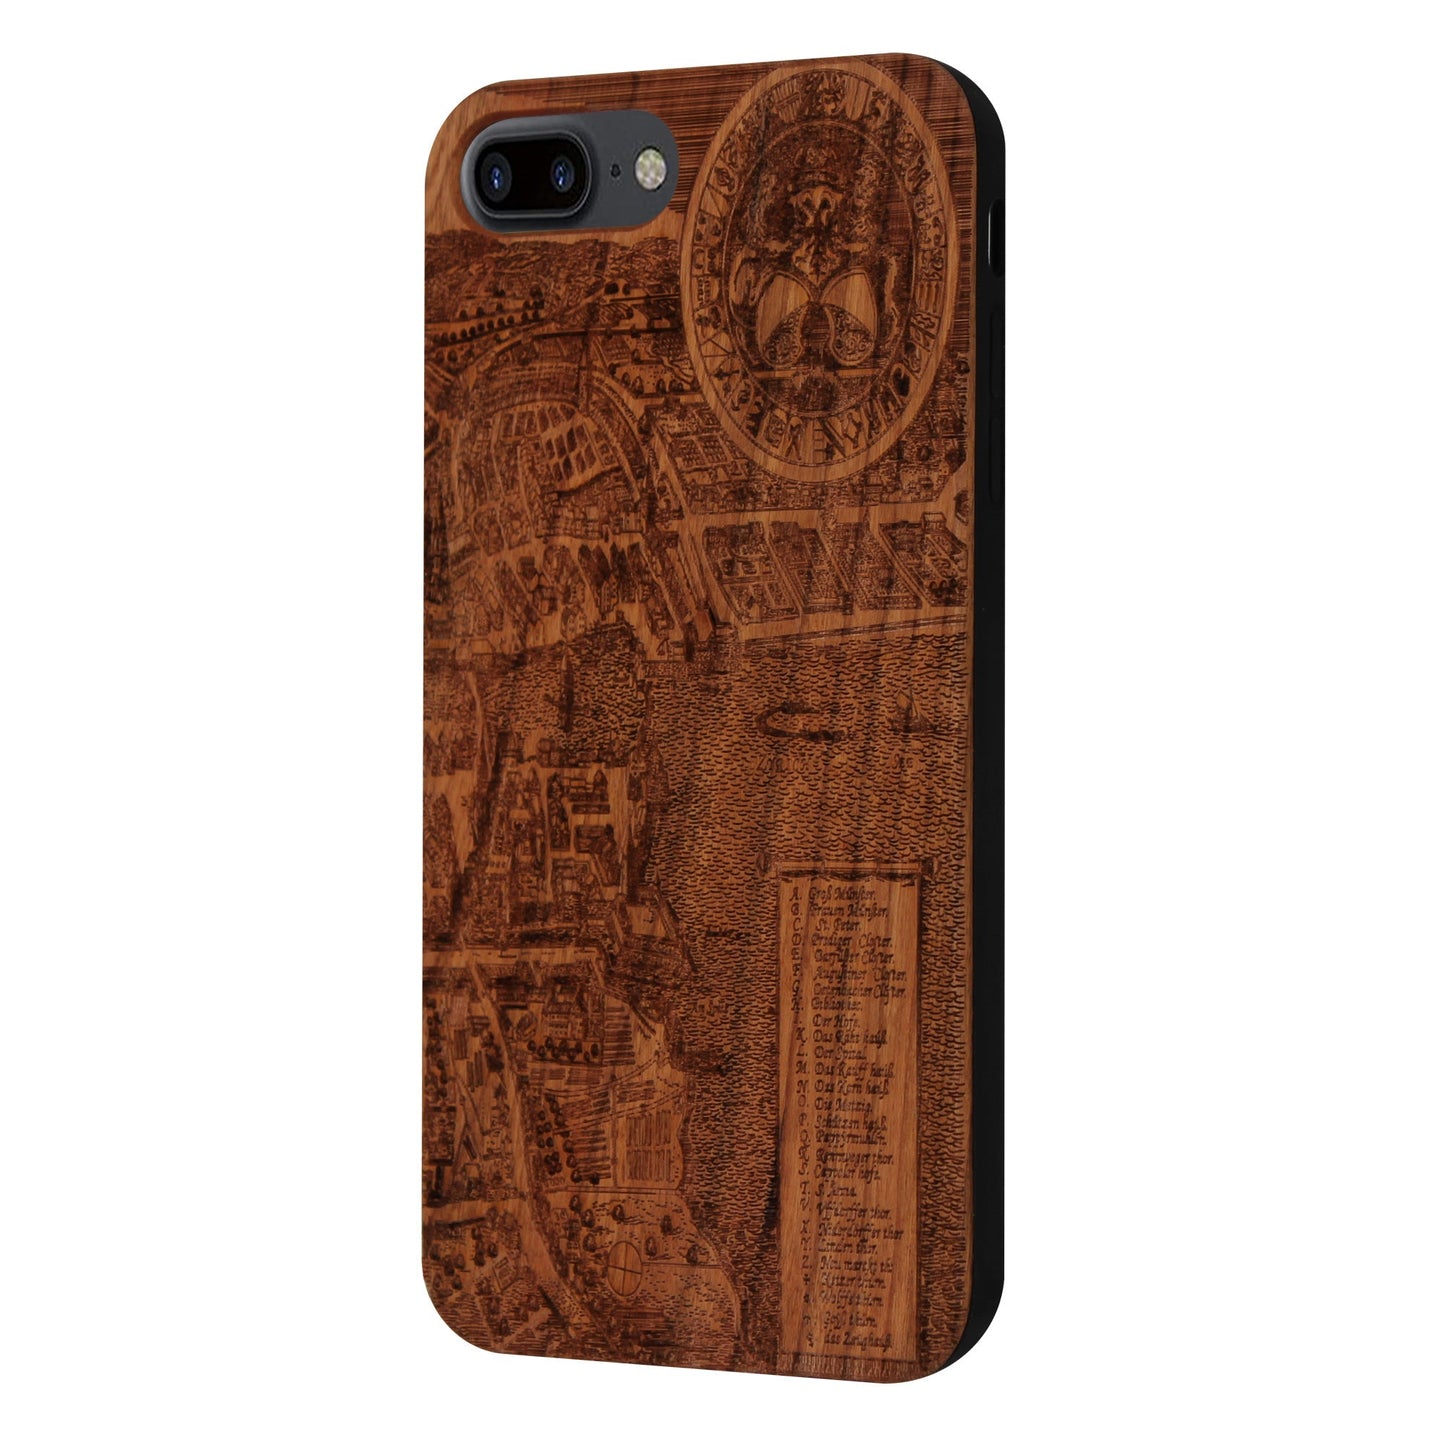 Zurich Merian Eden case made of cherry wood for iPhone 6/6S/7/8 Plus